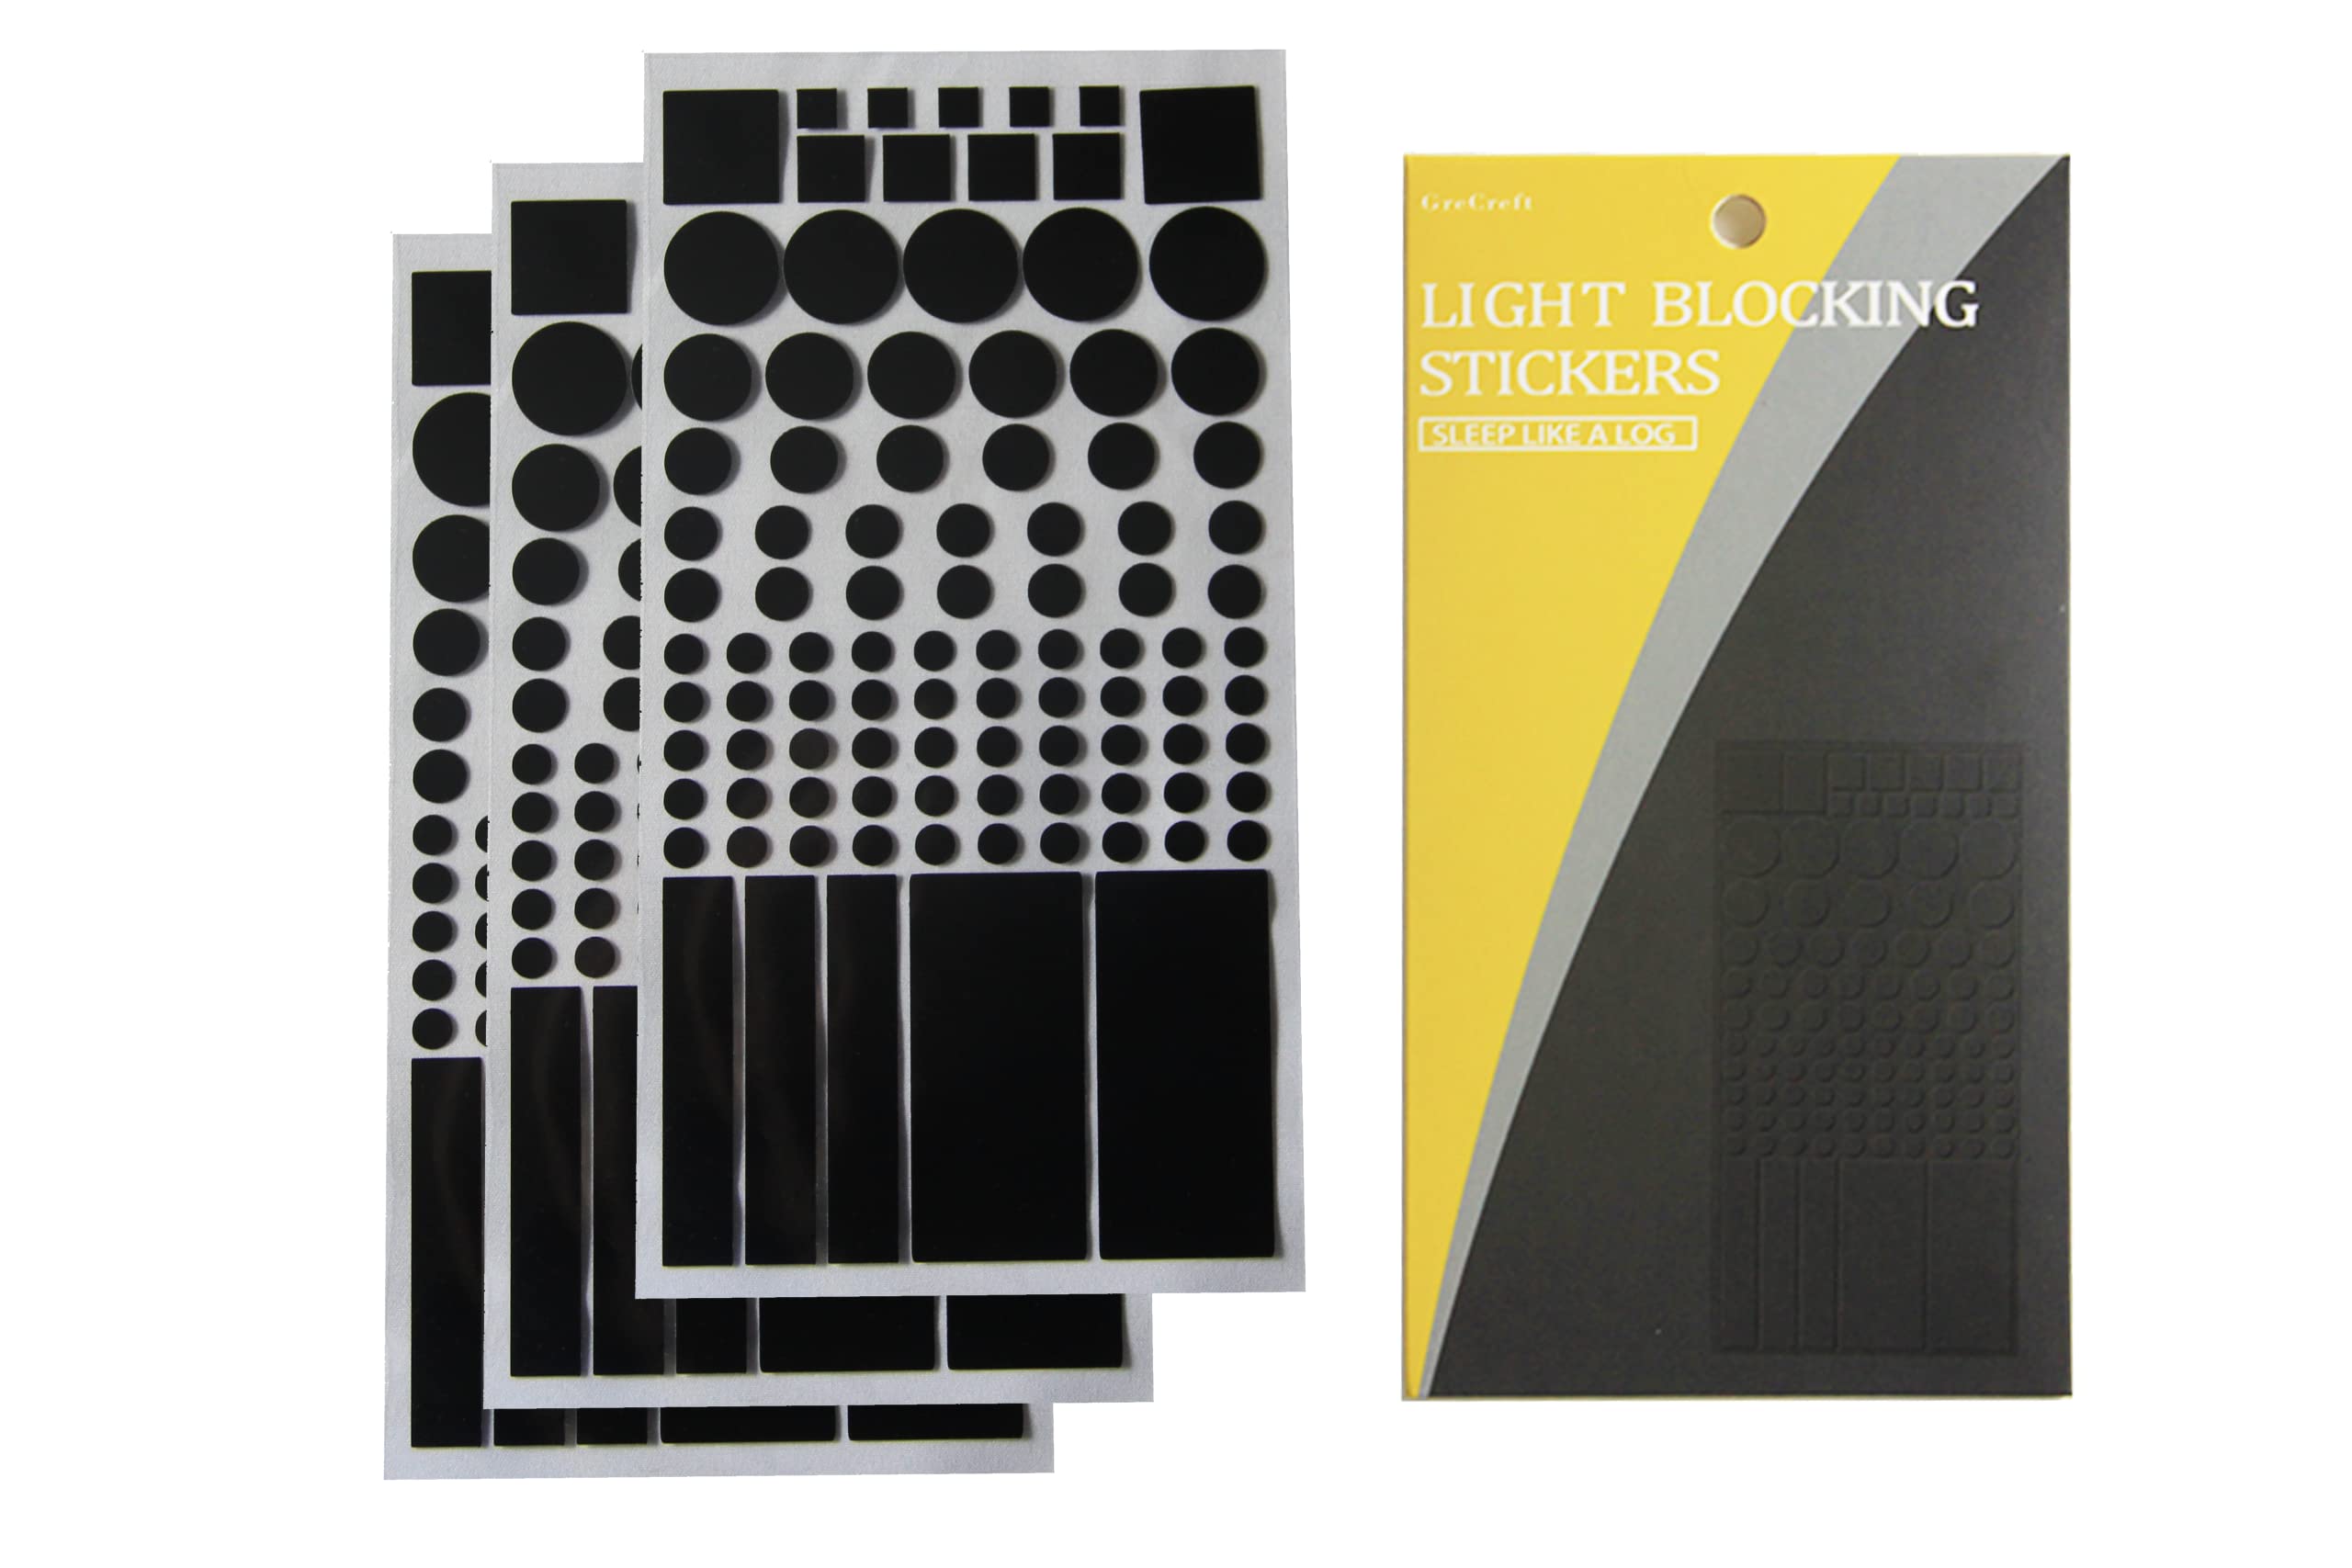 GreCreft Light Dimming Stickers, (3 Sheets) LED Light Blocking